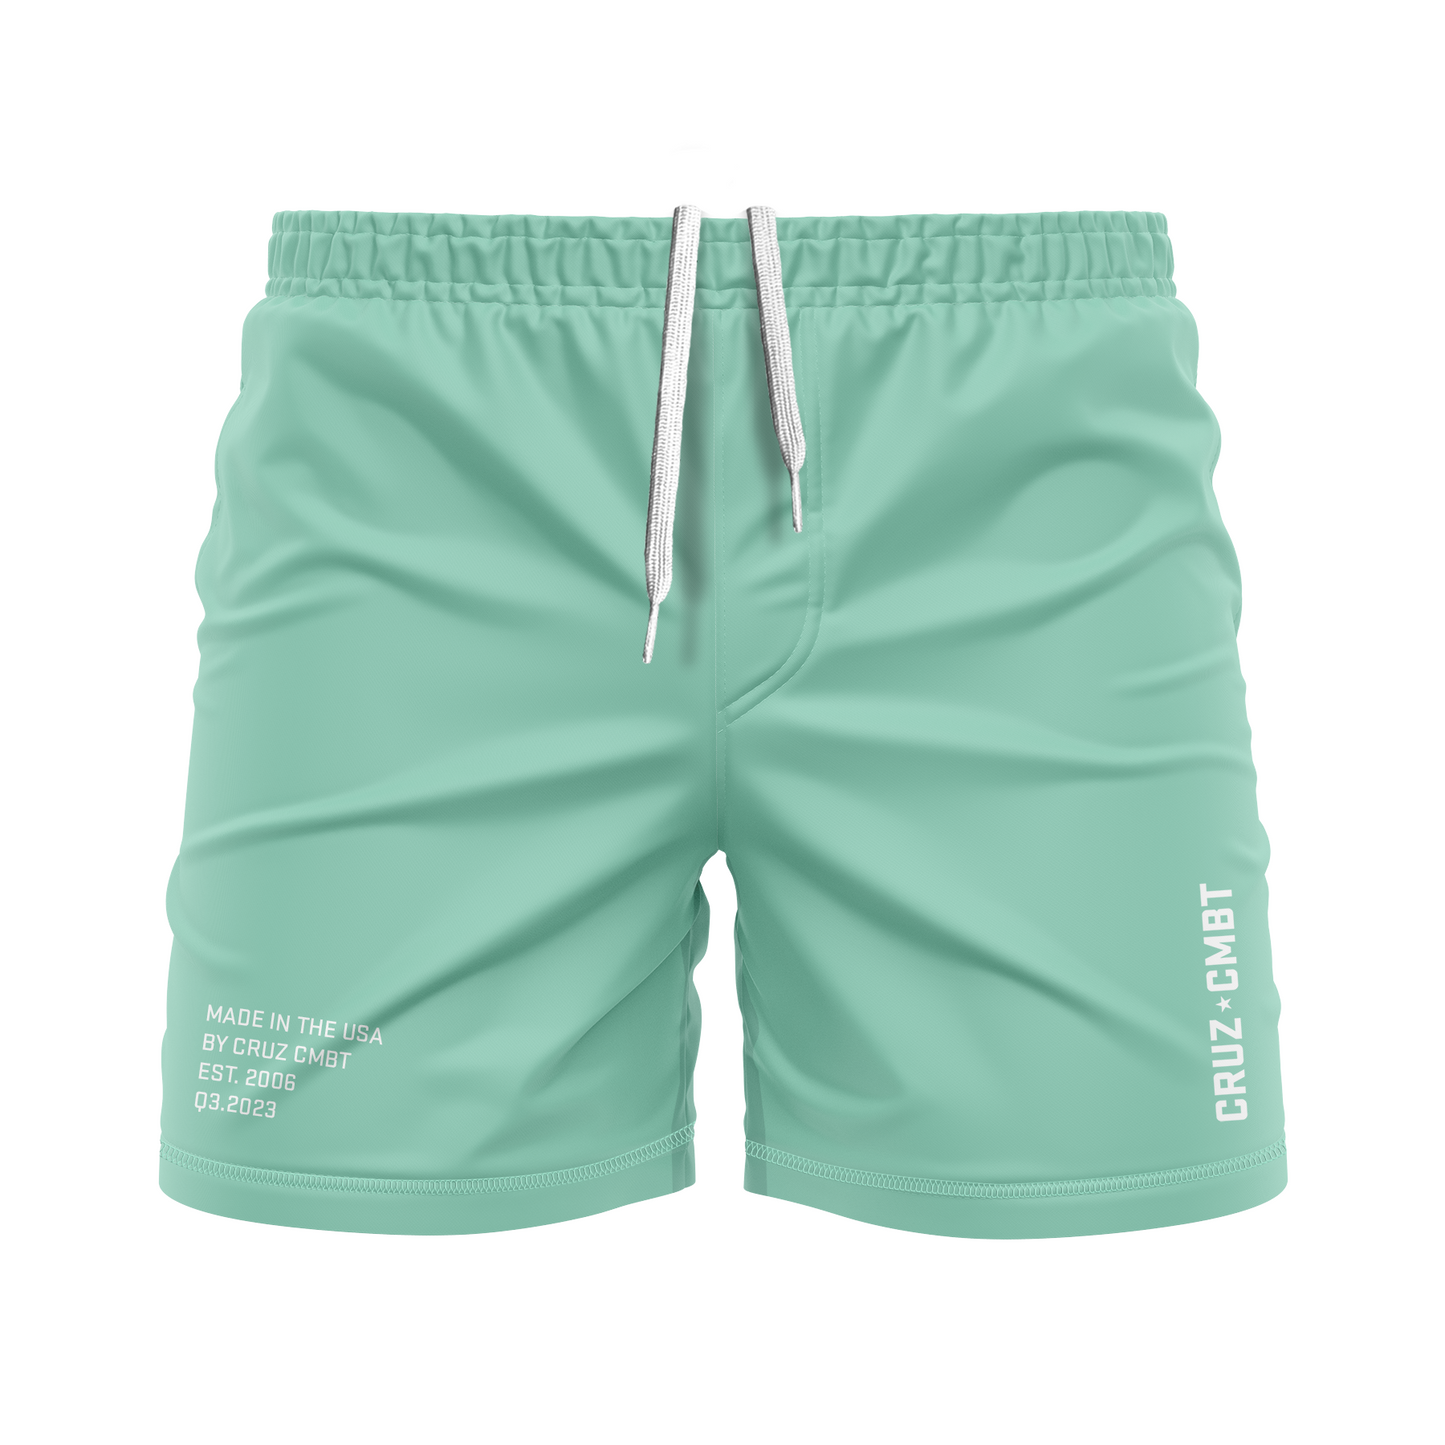 Base Collection men's FC shorts, Caribbean green